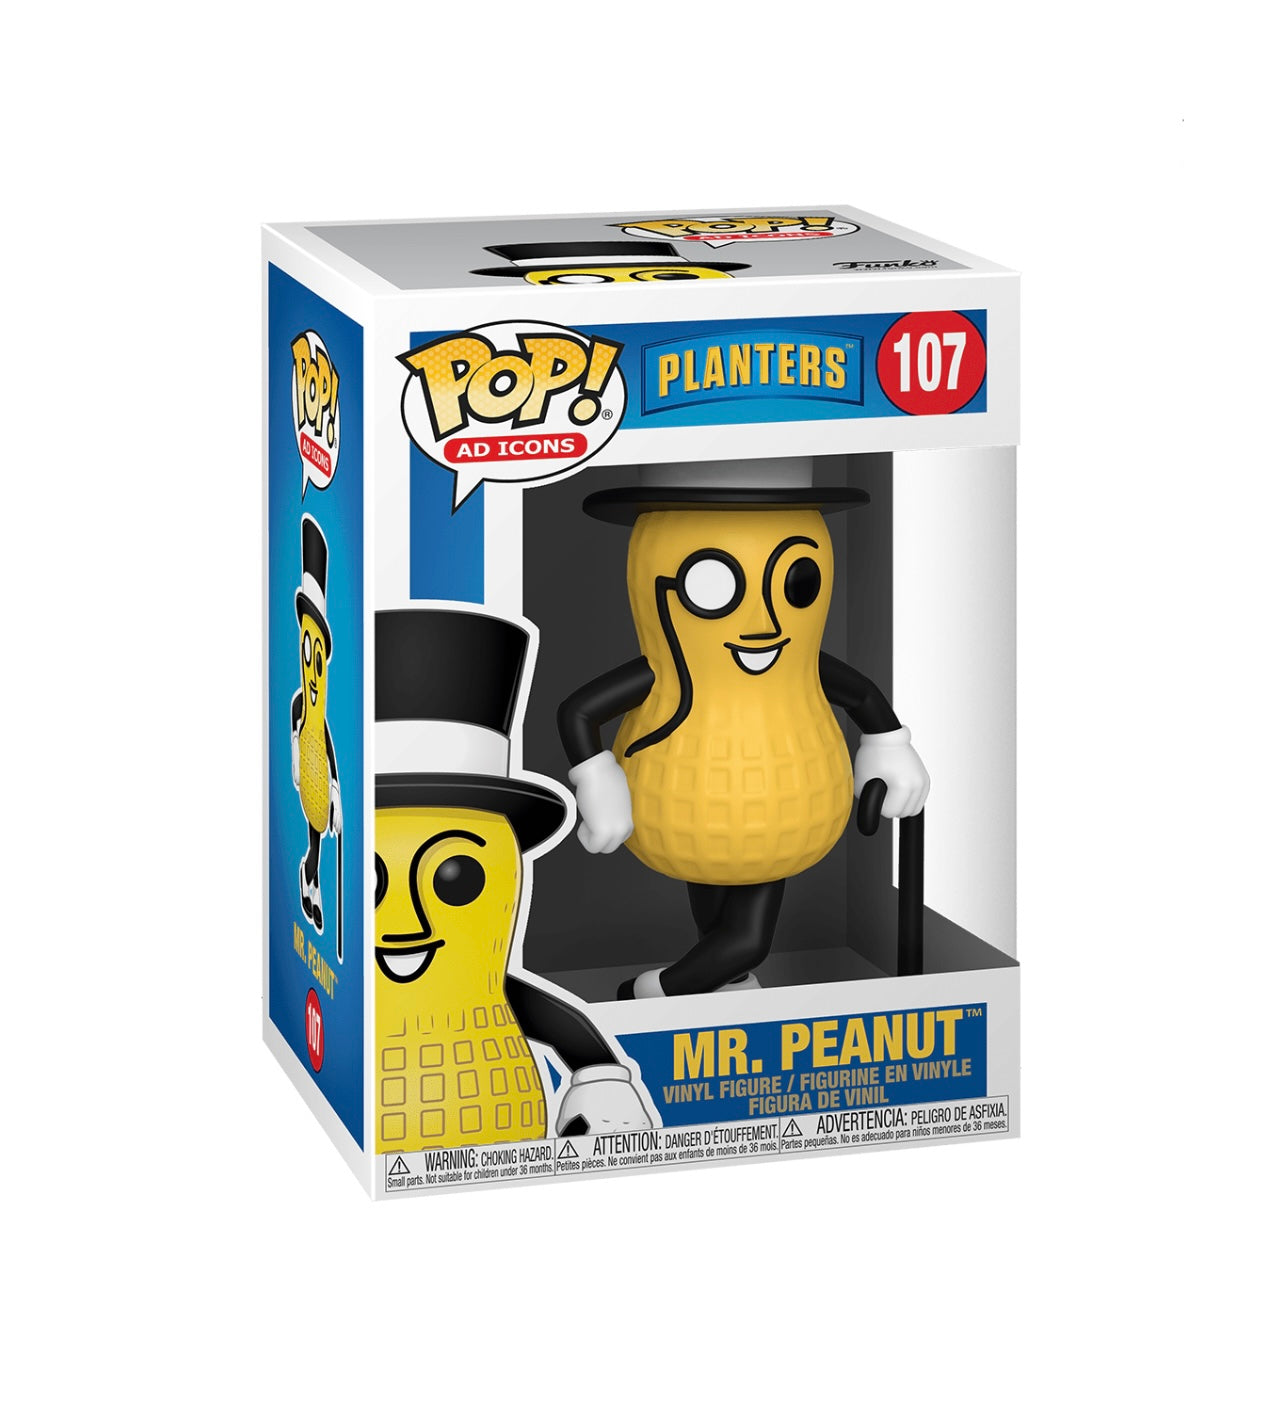 POP! Ad Icons Planters Mr. Peanut #107